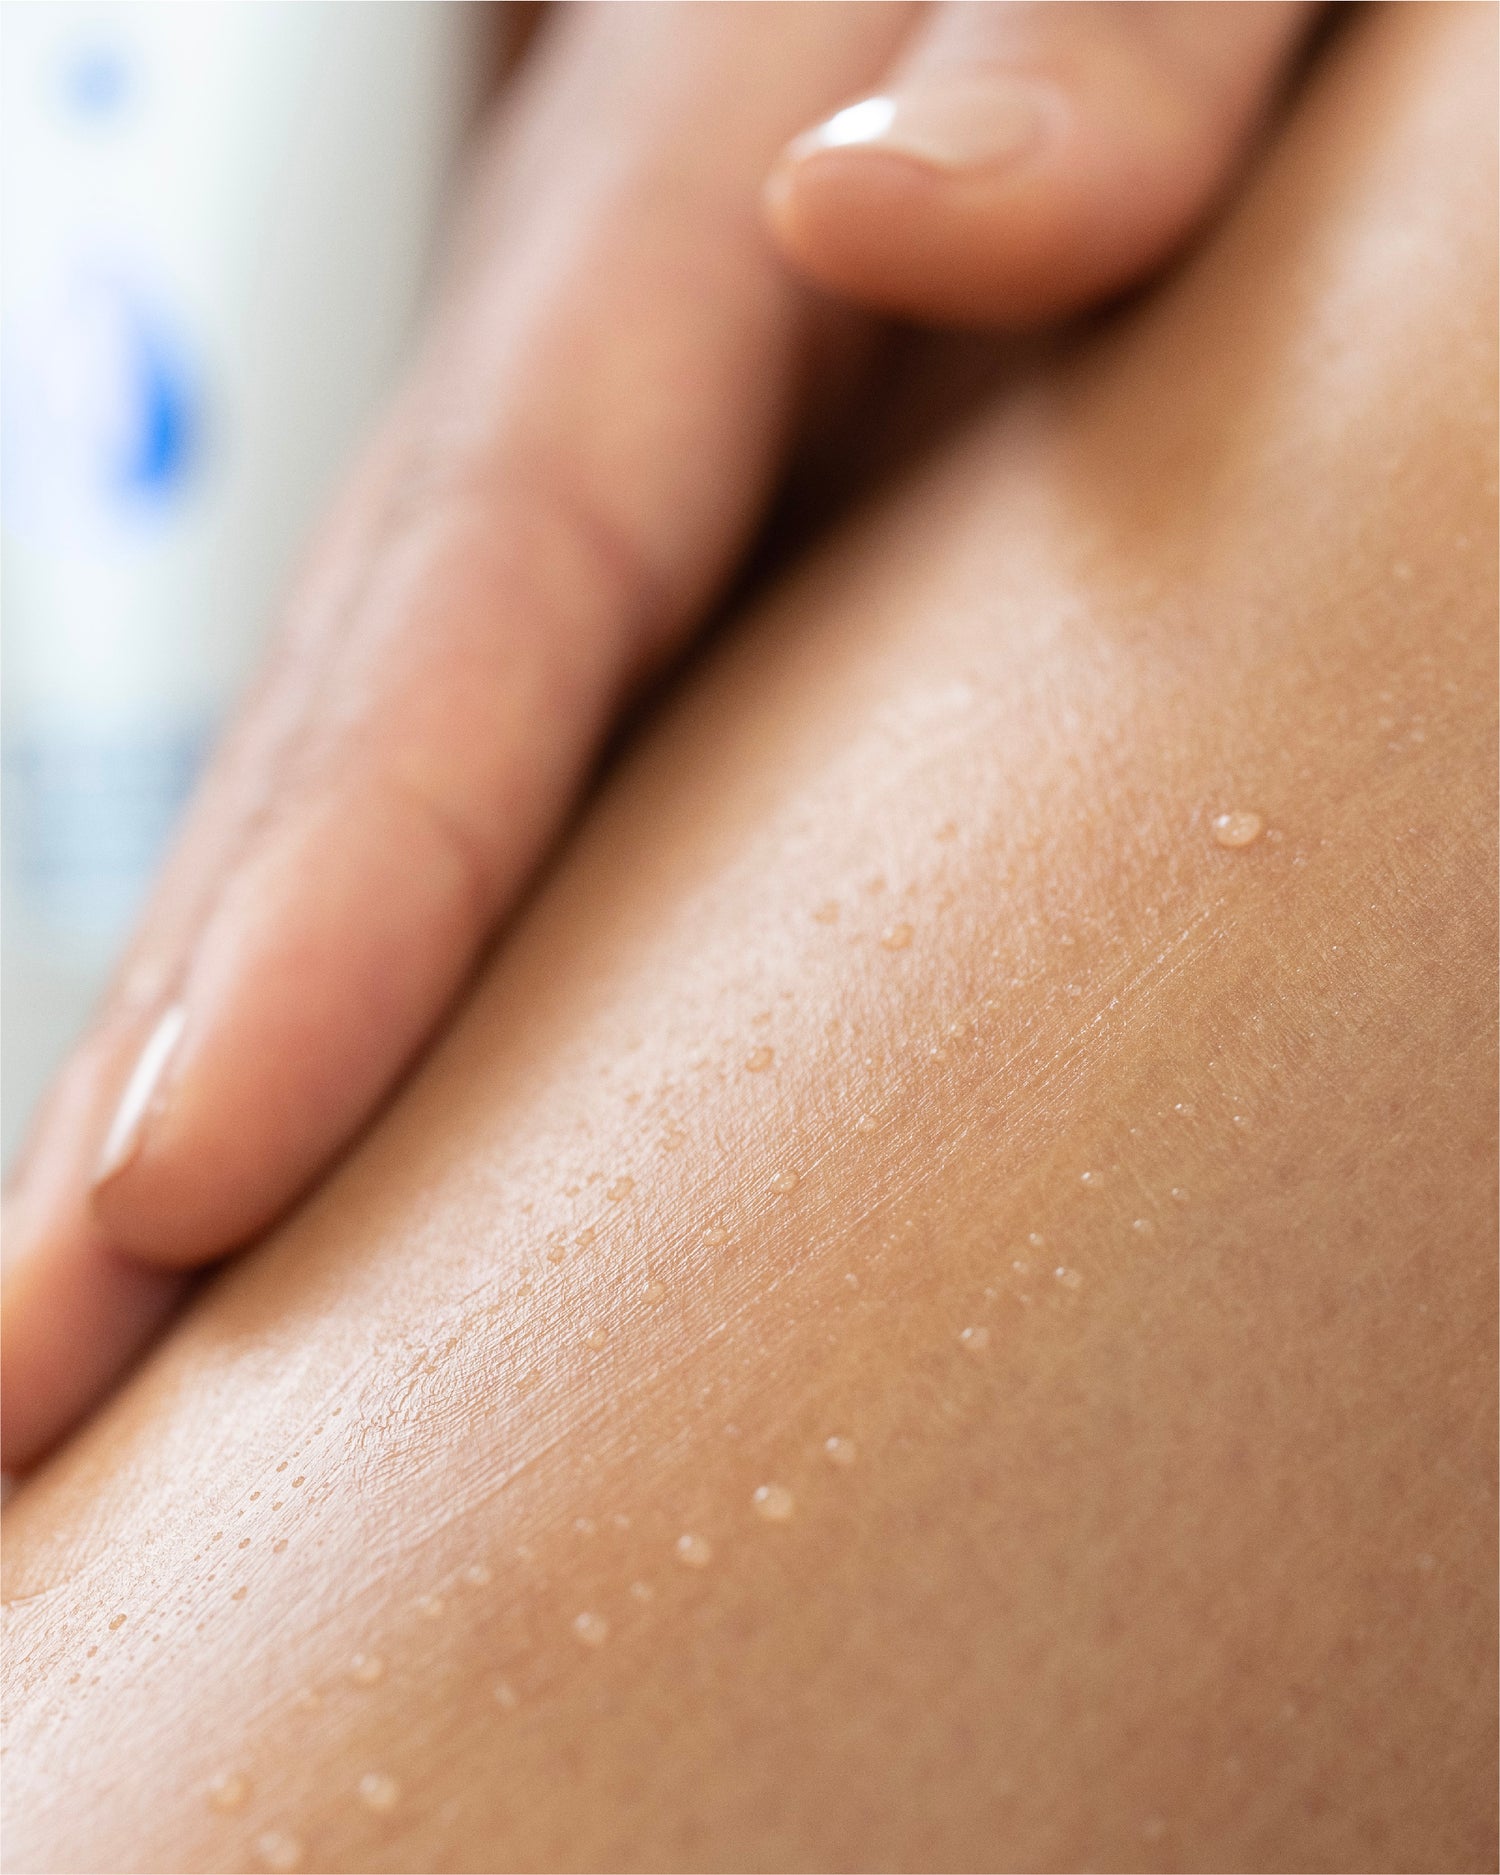 oil-free water treatment moisturizer cream turns to water on leg